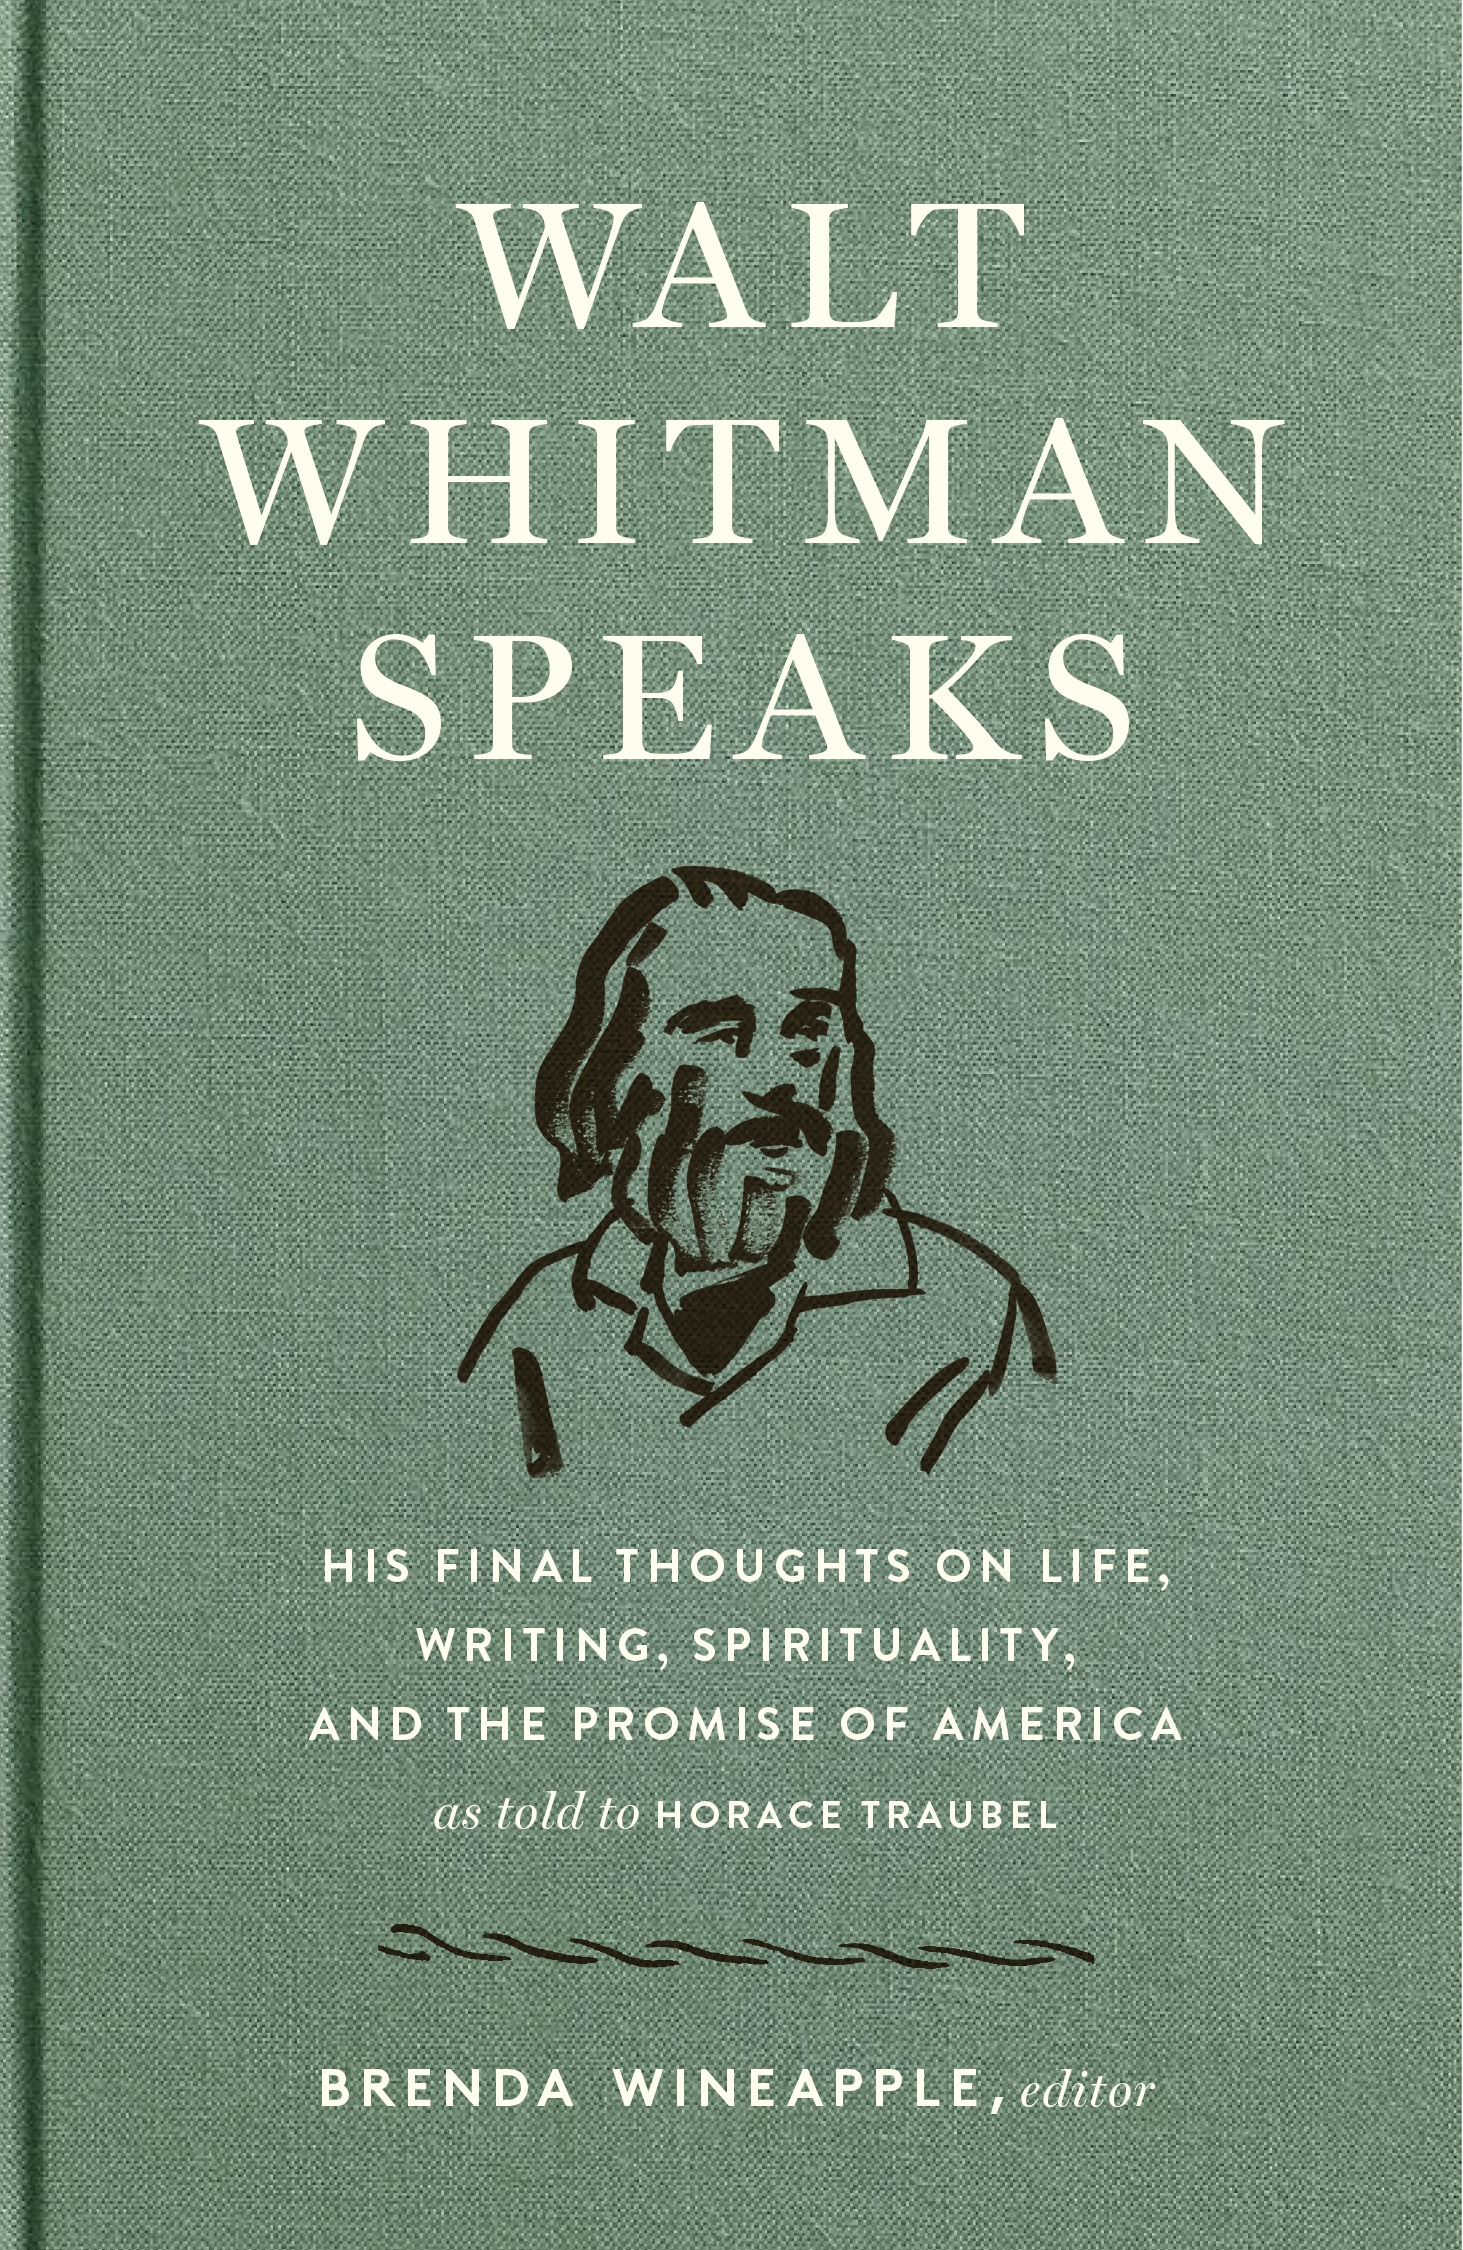 walt whitman short biography